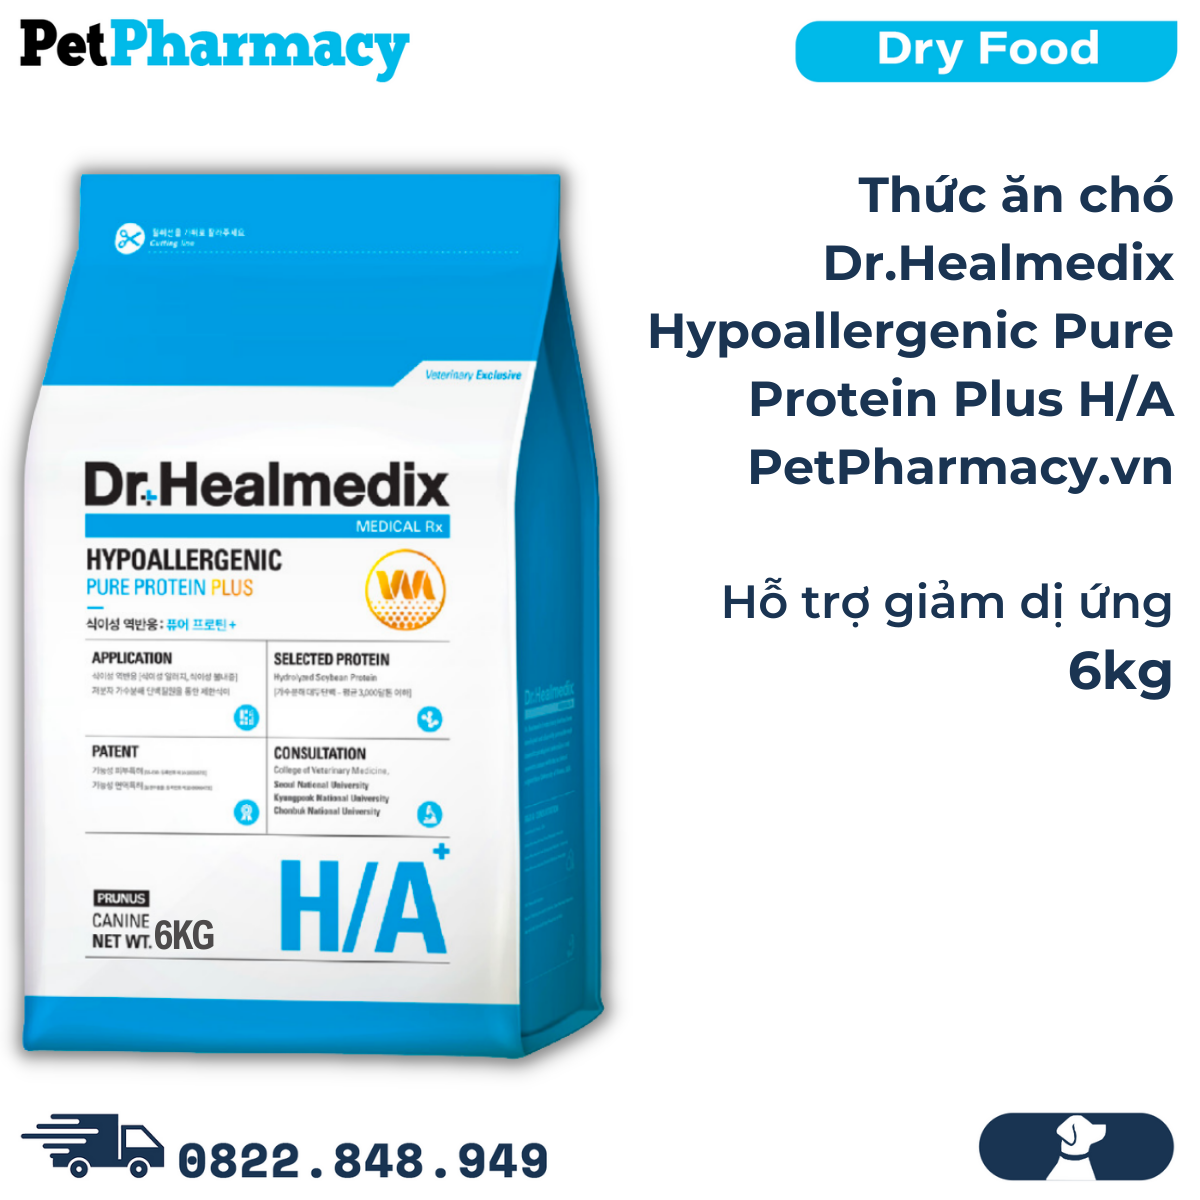  Thức ăn chó Dr.Healmedix Hypoallergenic Pure Protein Plus H/A 6kg - Hỗ trợ giảm dị ứng PetPharmacy 